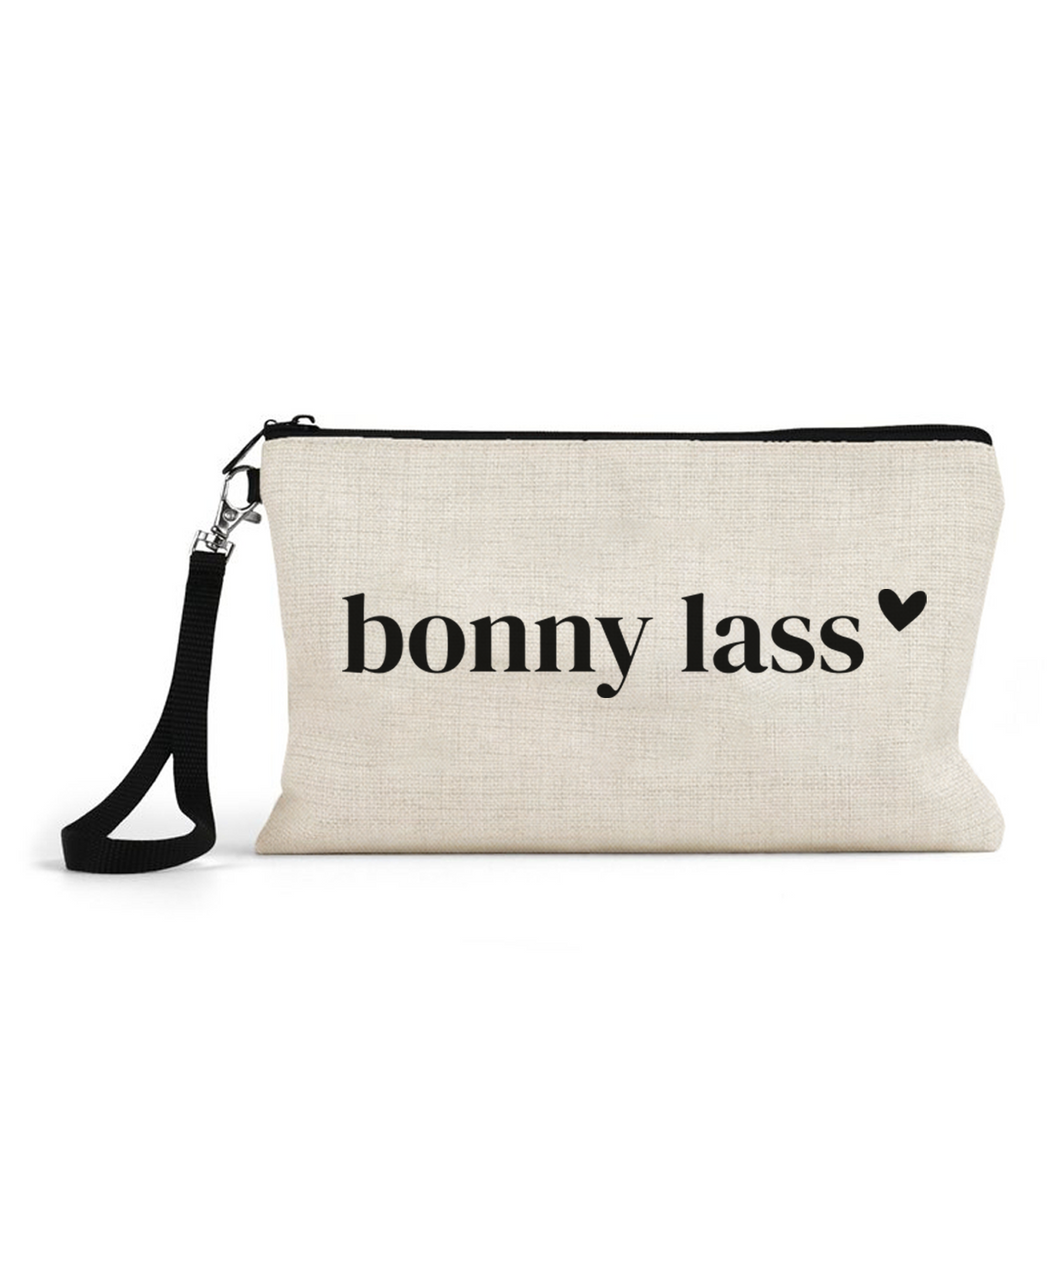 Bonny Lass - Cosmetic Bag